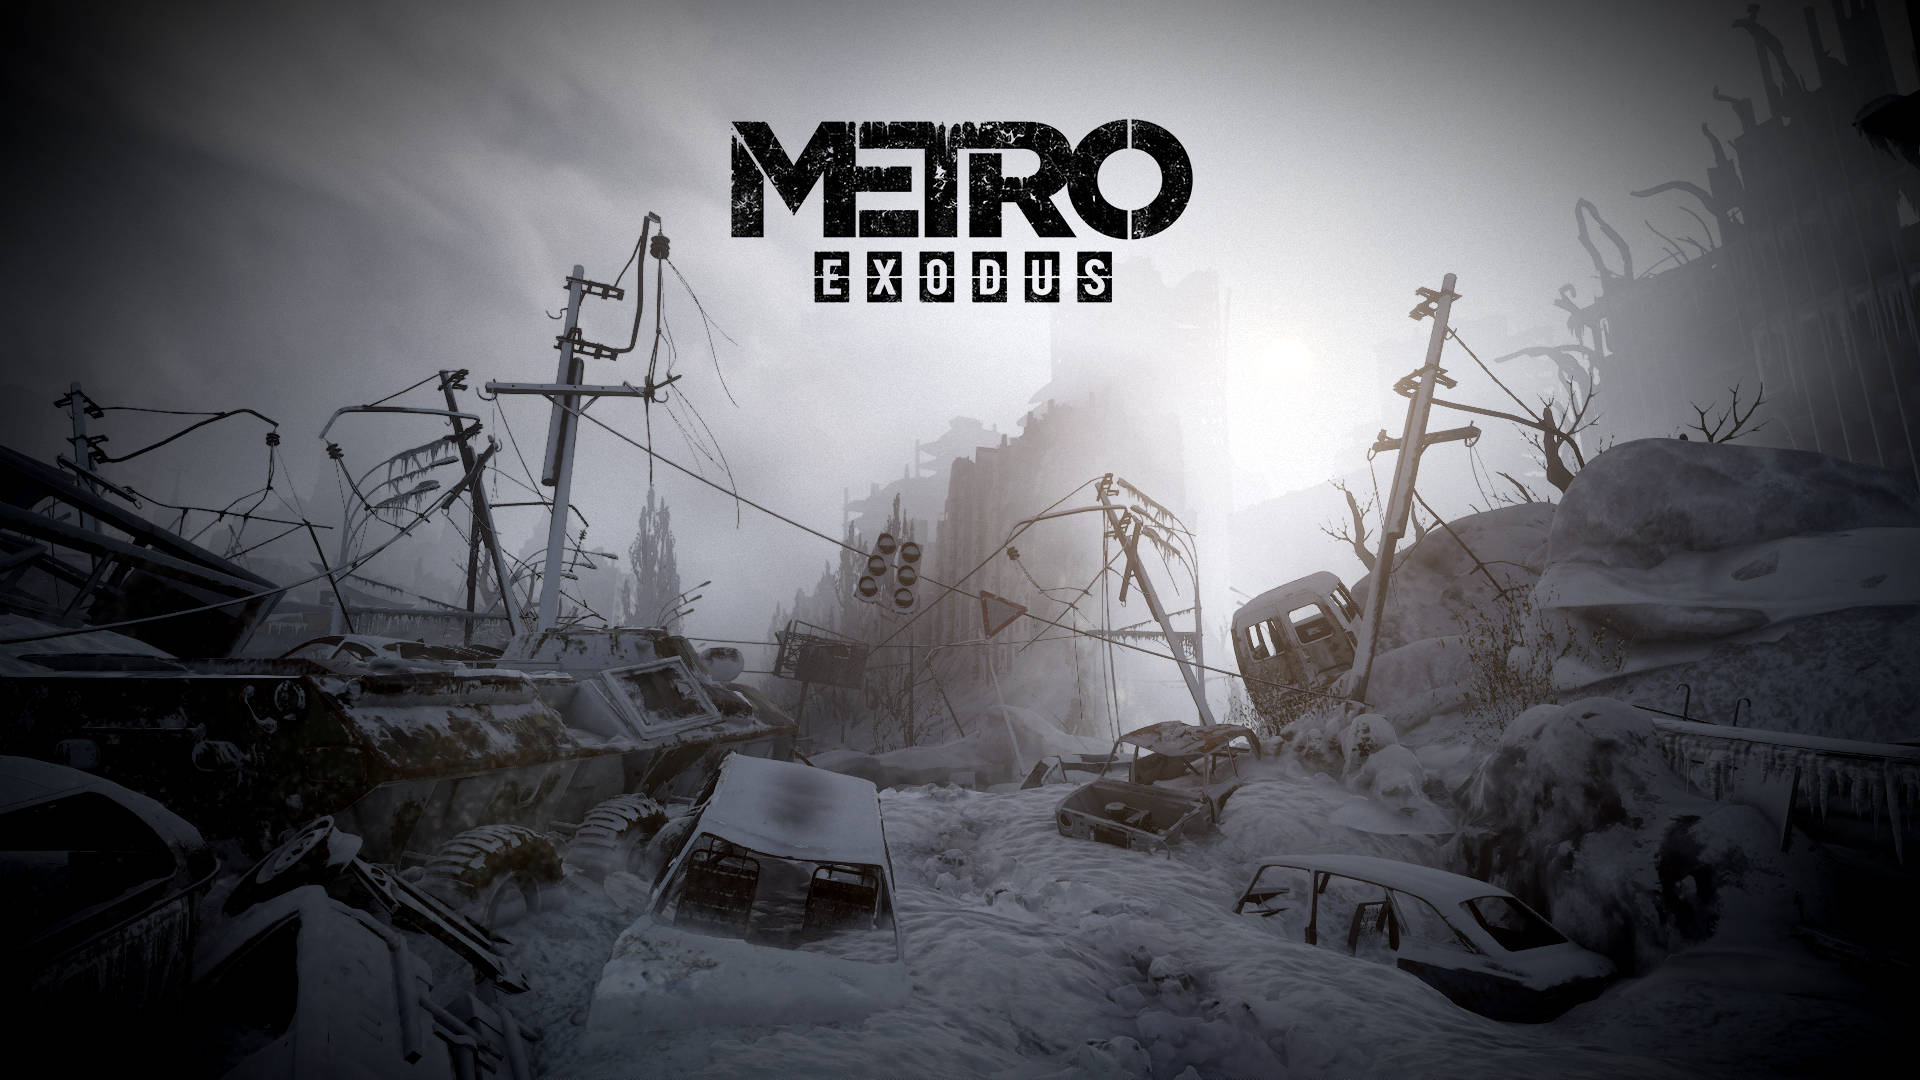 "Metro Exodus Immersive Widescreen Gameplay" Wallpaper